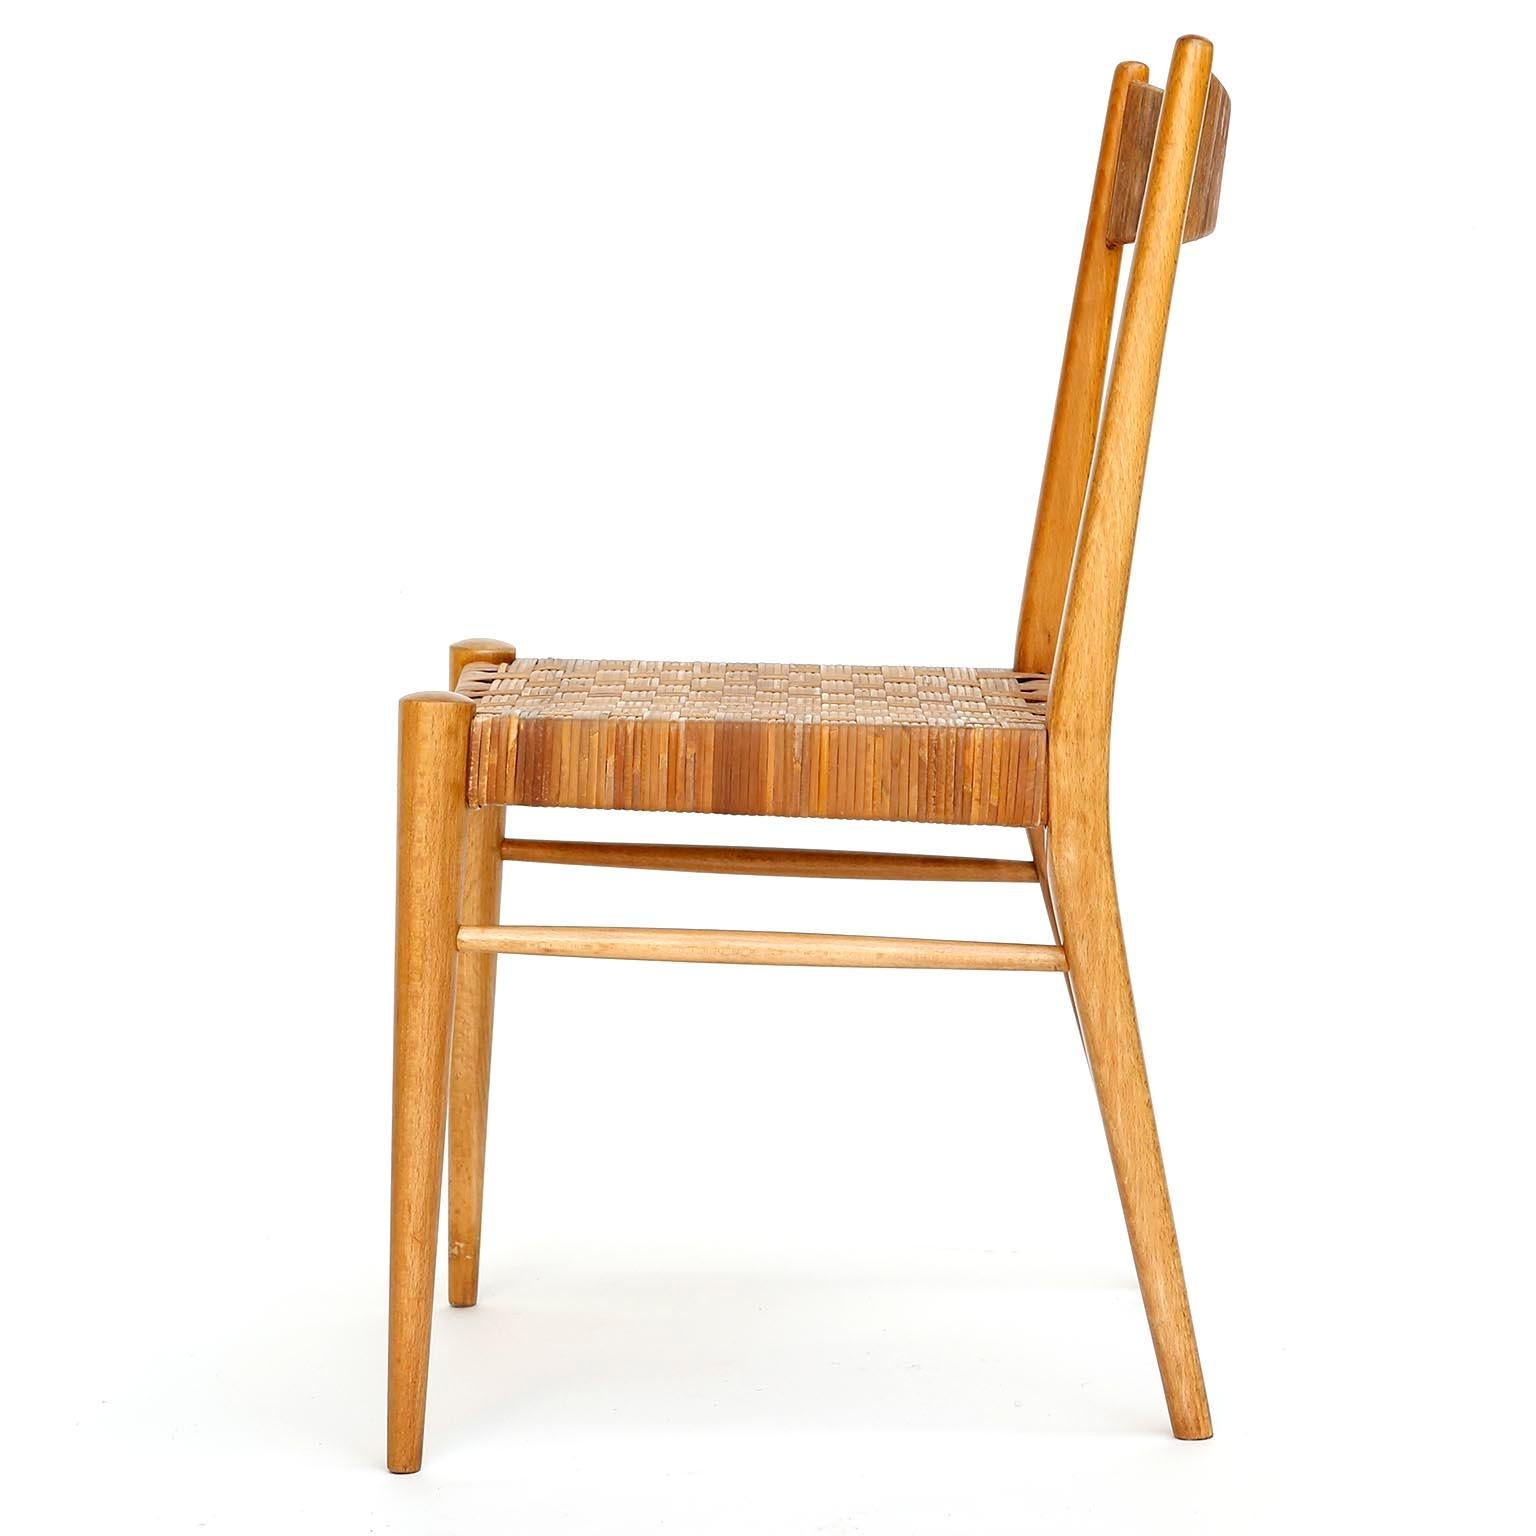 Four Anna-Lülja Praun Chairs, Wood Wicker Cane, 1950s For Sale 3